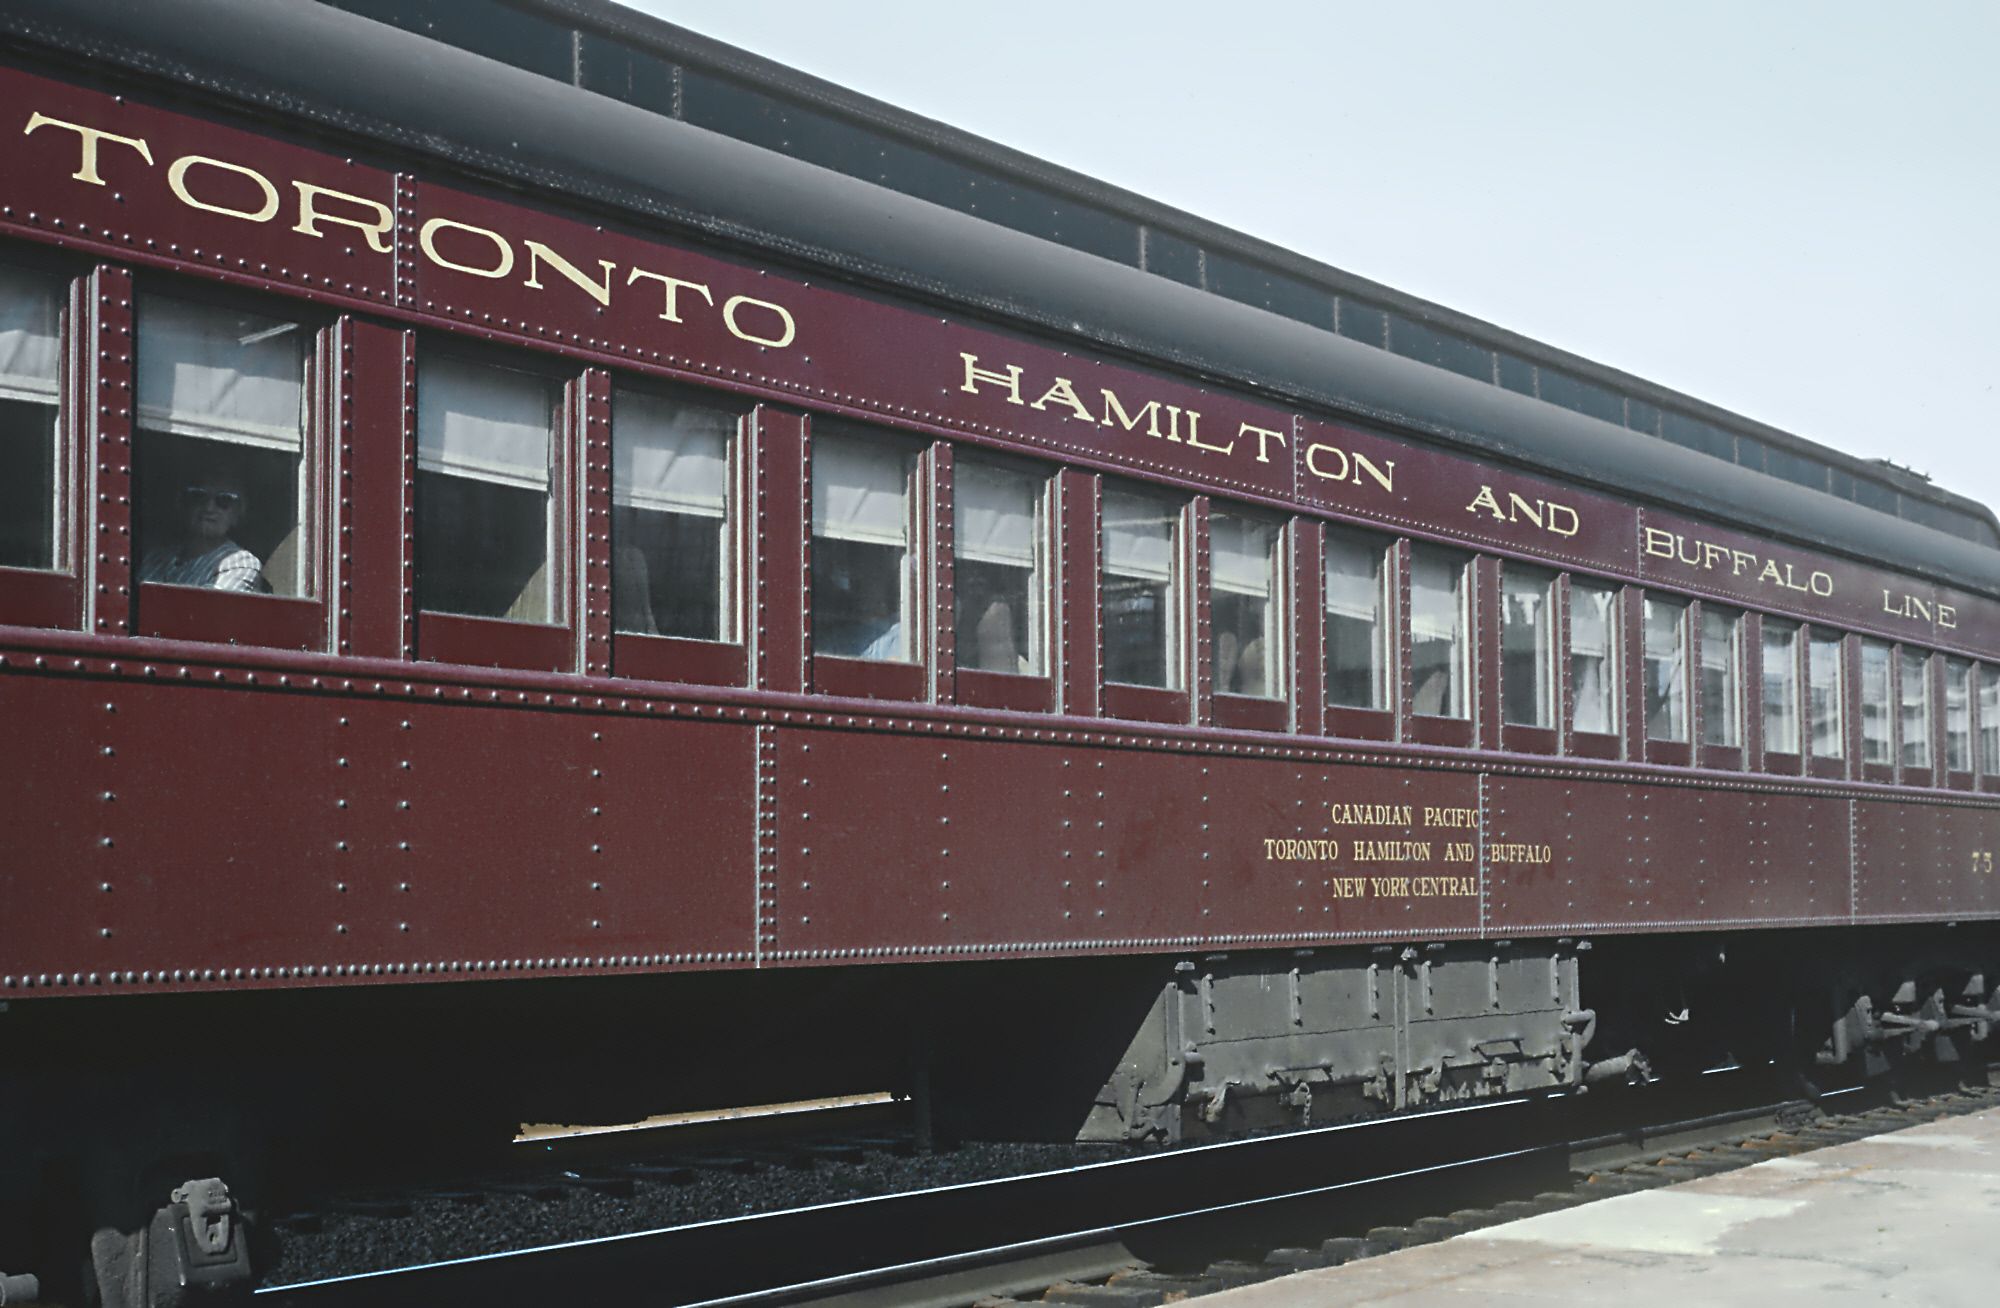 Toronto,_Hamilton_and_Buffalo_on_CP,_Train_322,_the_Ontarian_at_Sunnyside_station,_Toronto,_On...jpg